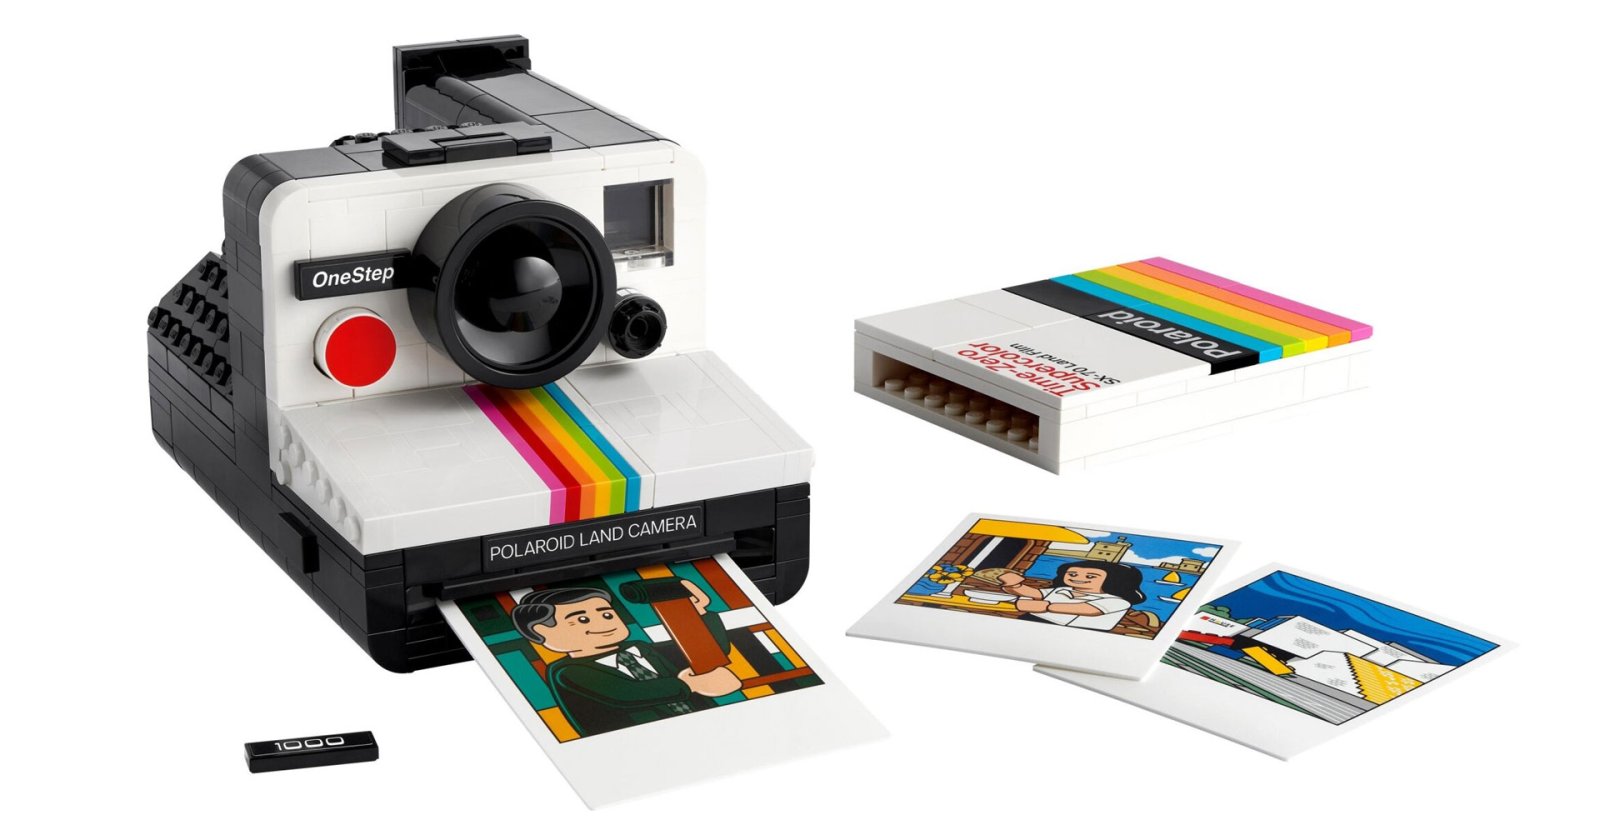 LEGO Polaroid OneStep SX-70 ตัวต่อจากกล้องรุ่นคลาสสิก มีฟีเจอร์สไลด์ฟิล์มสมจริง ที่เหล่าคนรักกล้องต้องหวั่นไหว